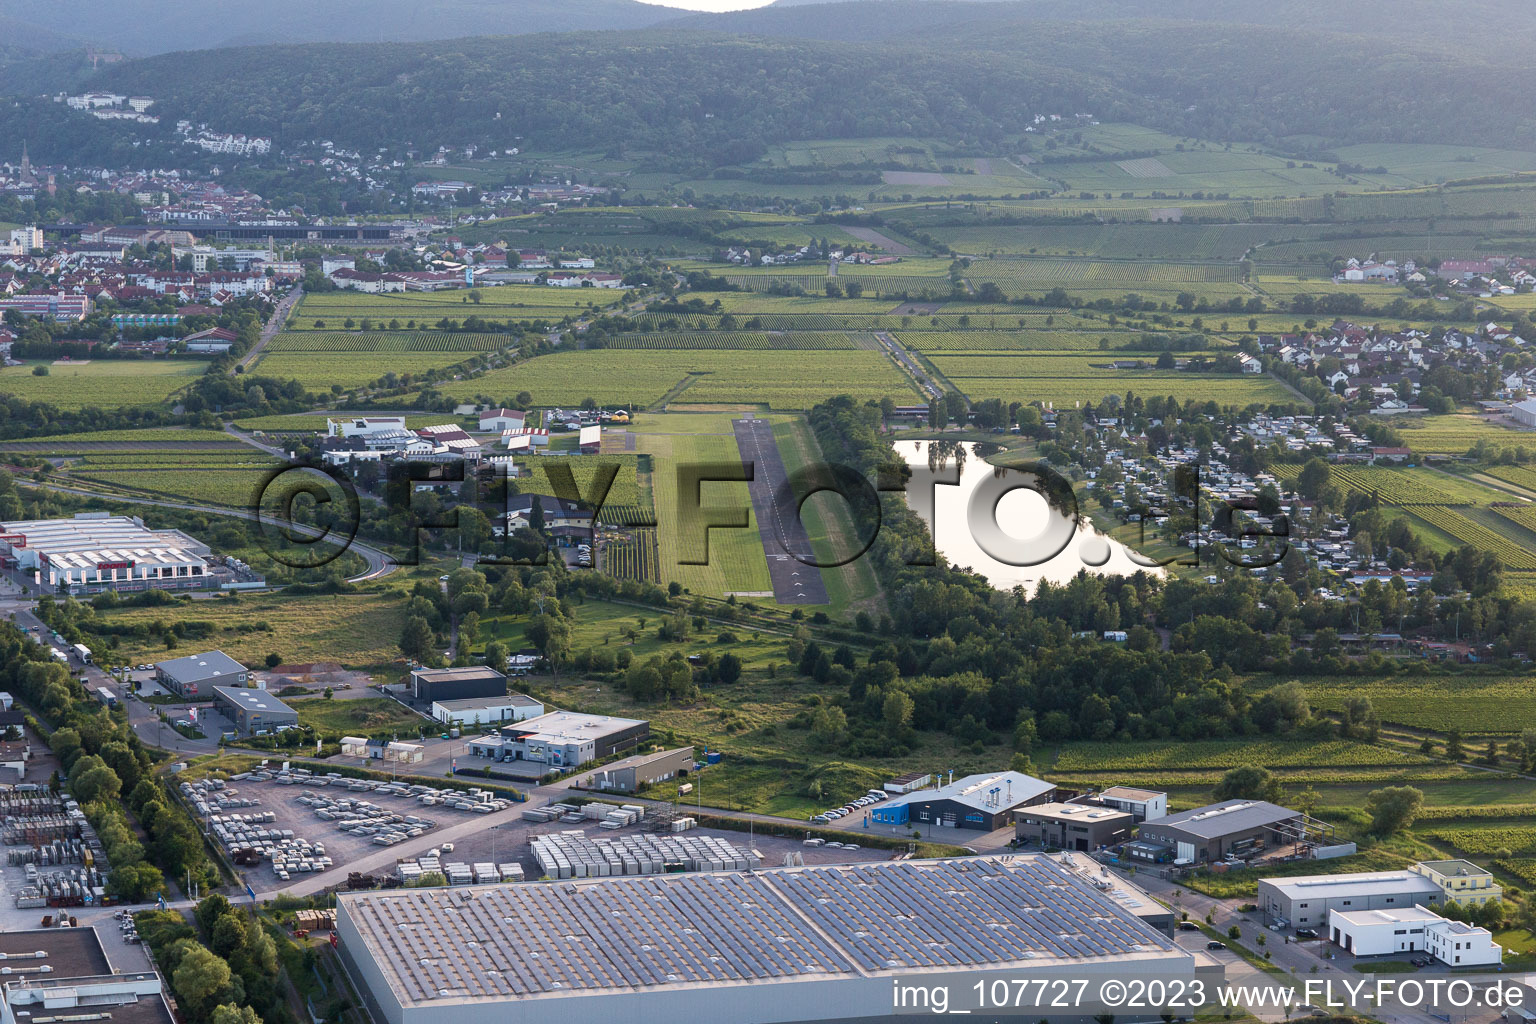 Airfield in Bad Dürkheim in the state Rhineland-Palatinate, Germany